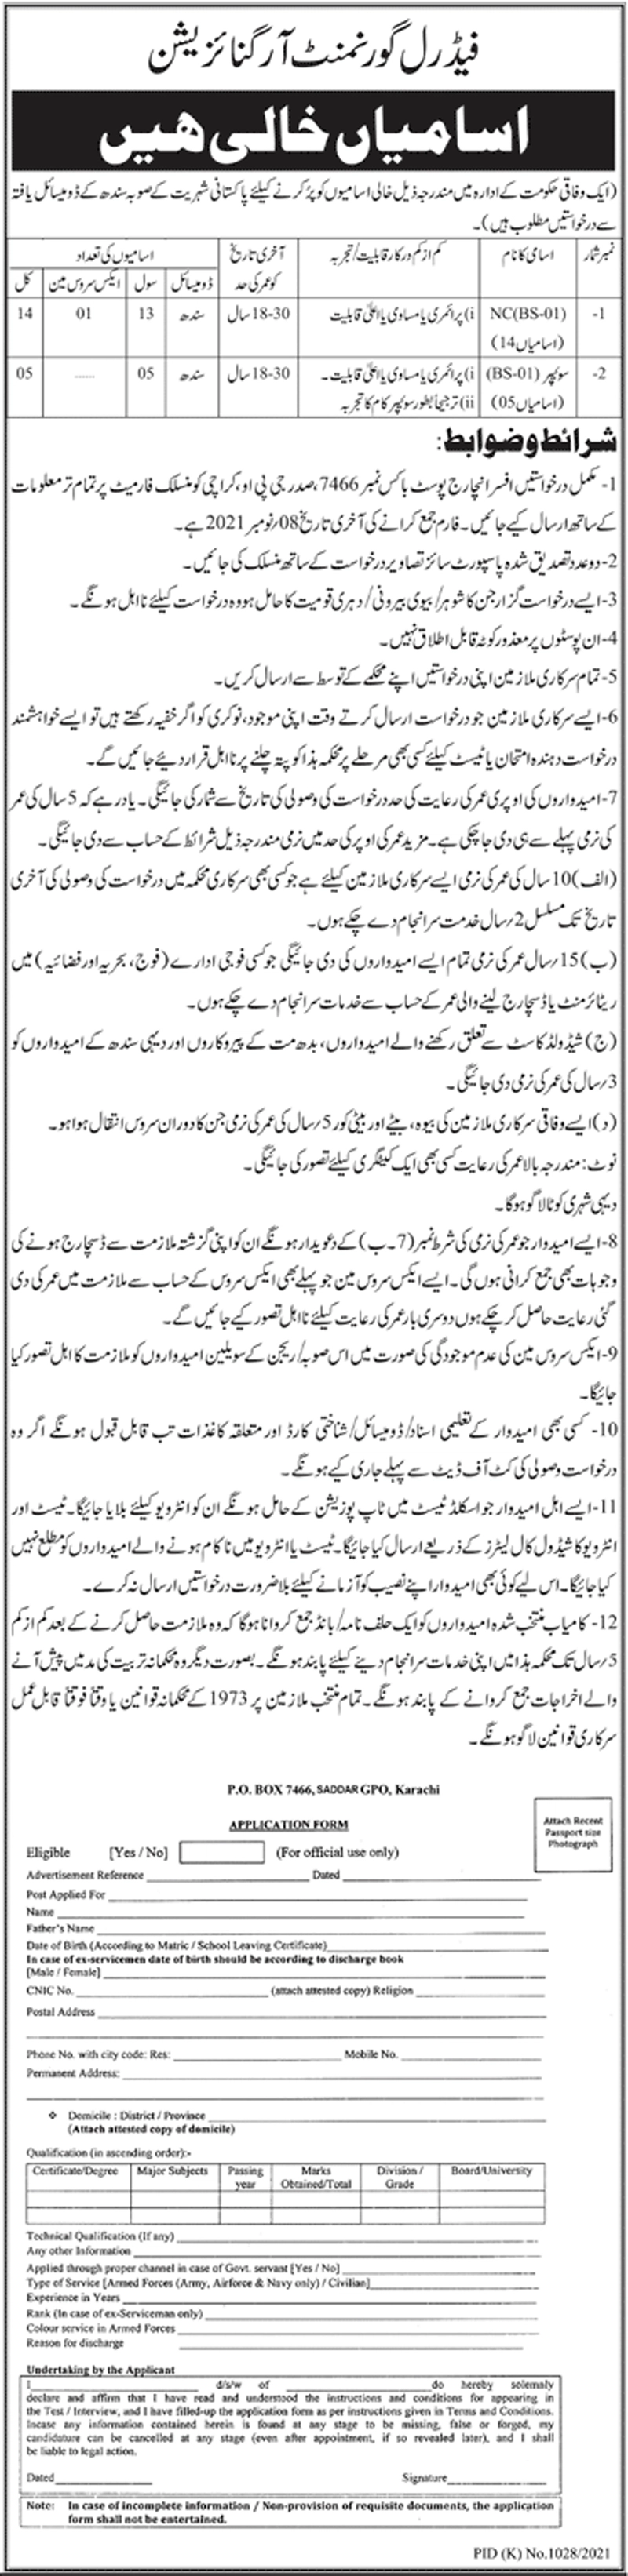 Federal Govt Organization Karachi Jobs